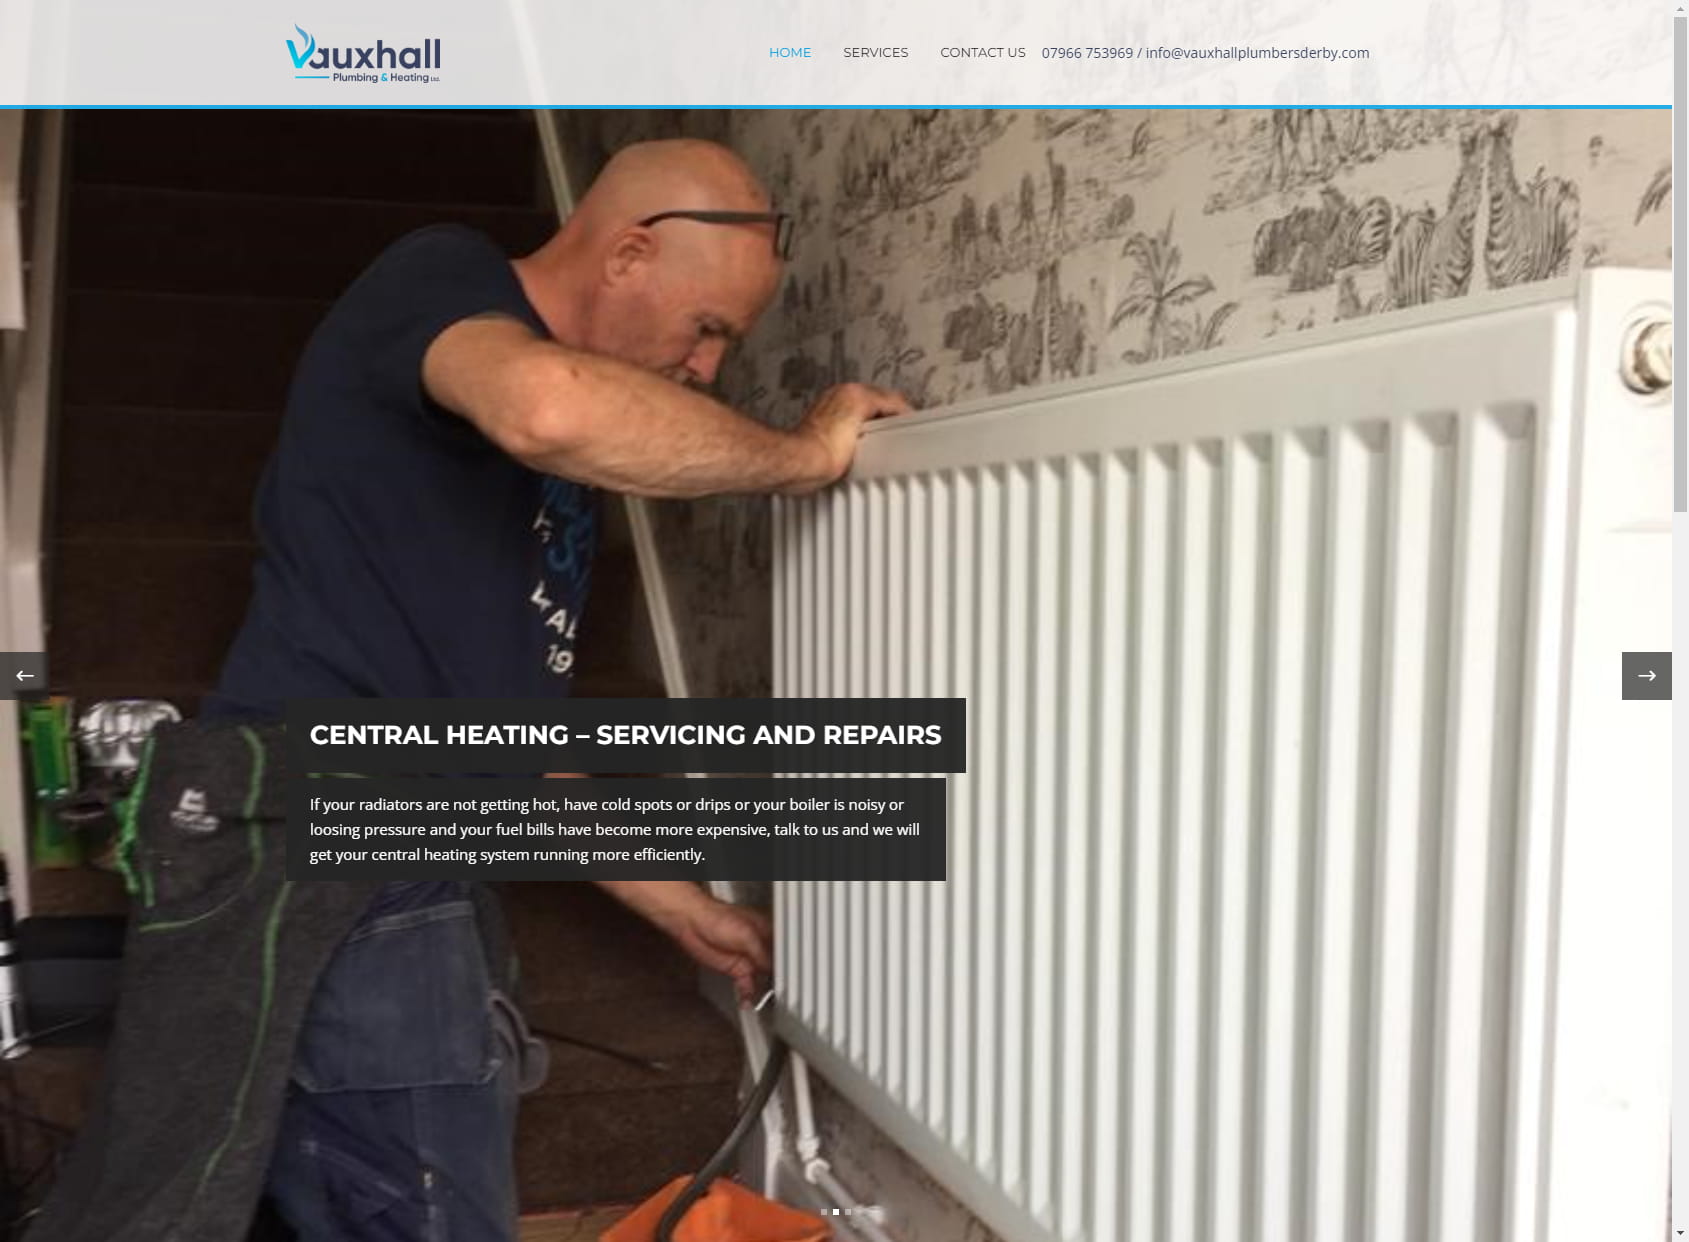 Vauxhall Plumbing & Heating Ltd